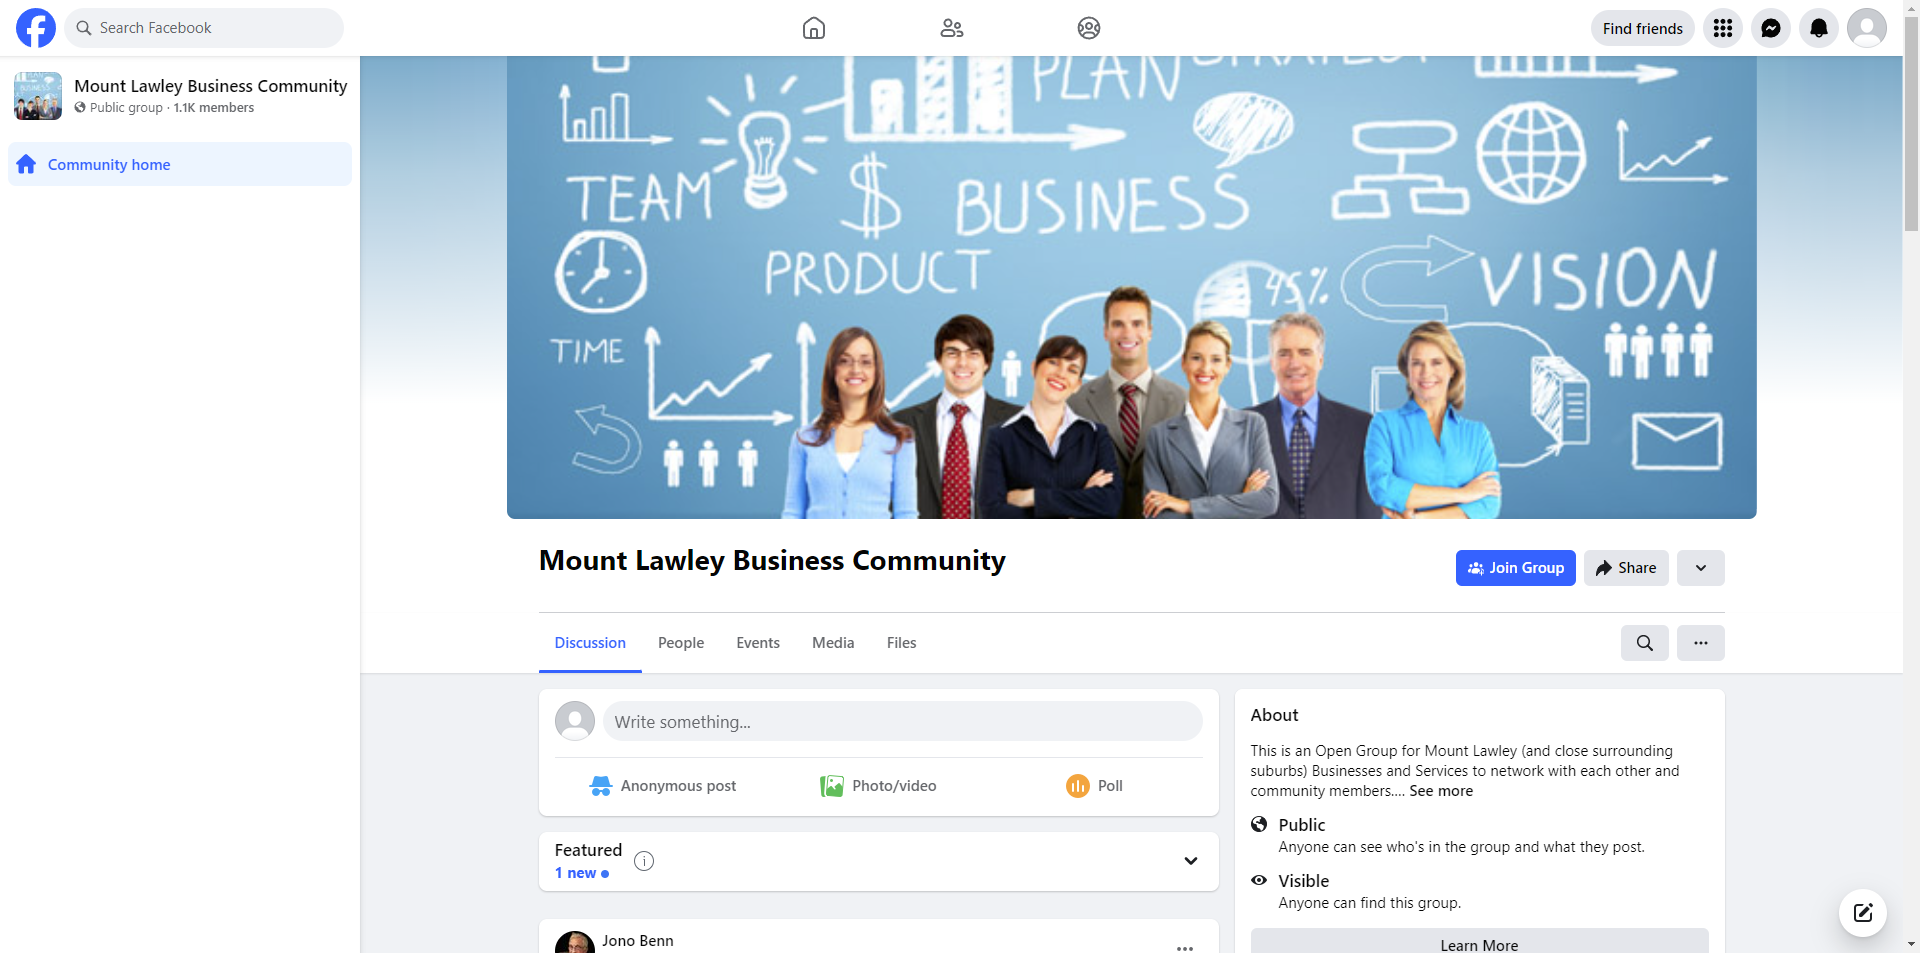 Mount Lawley Business Community